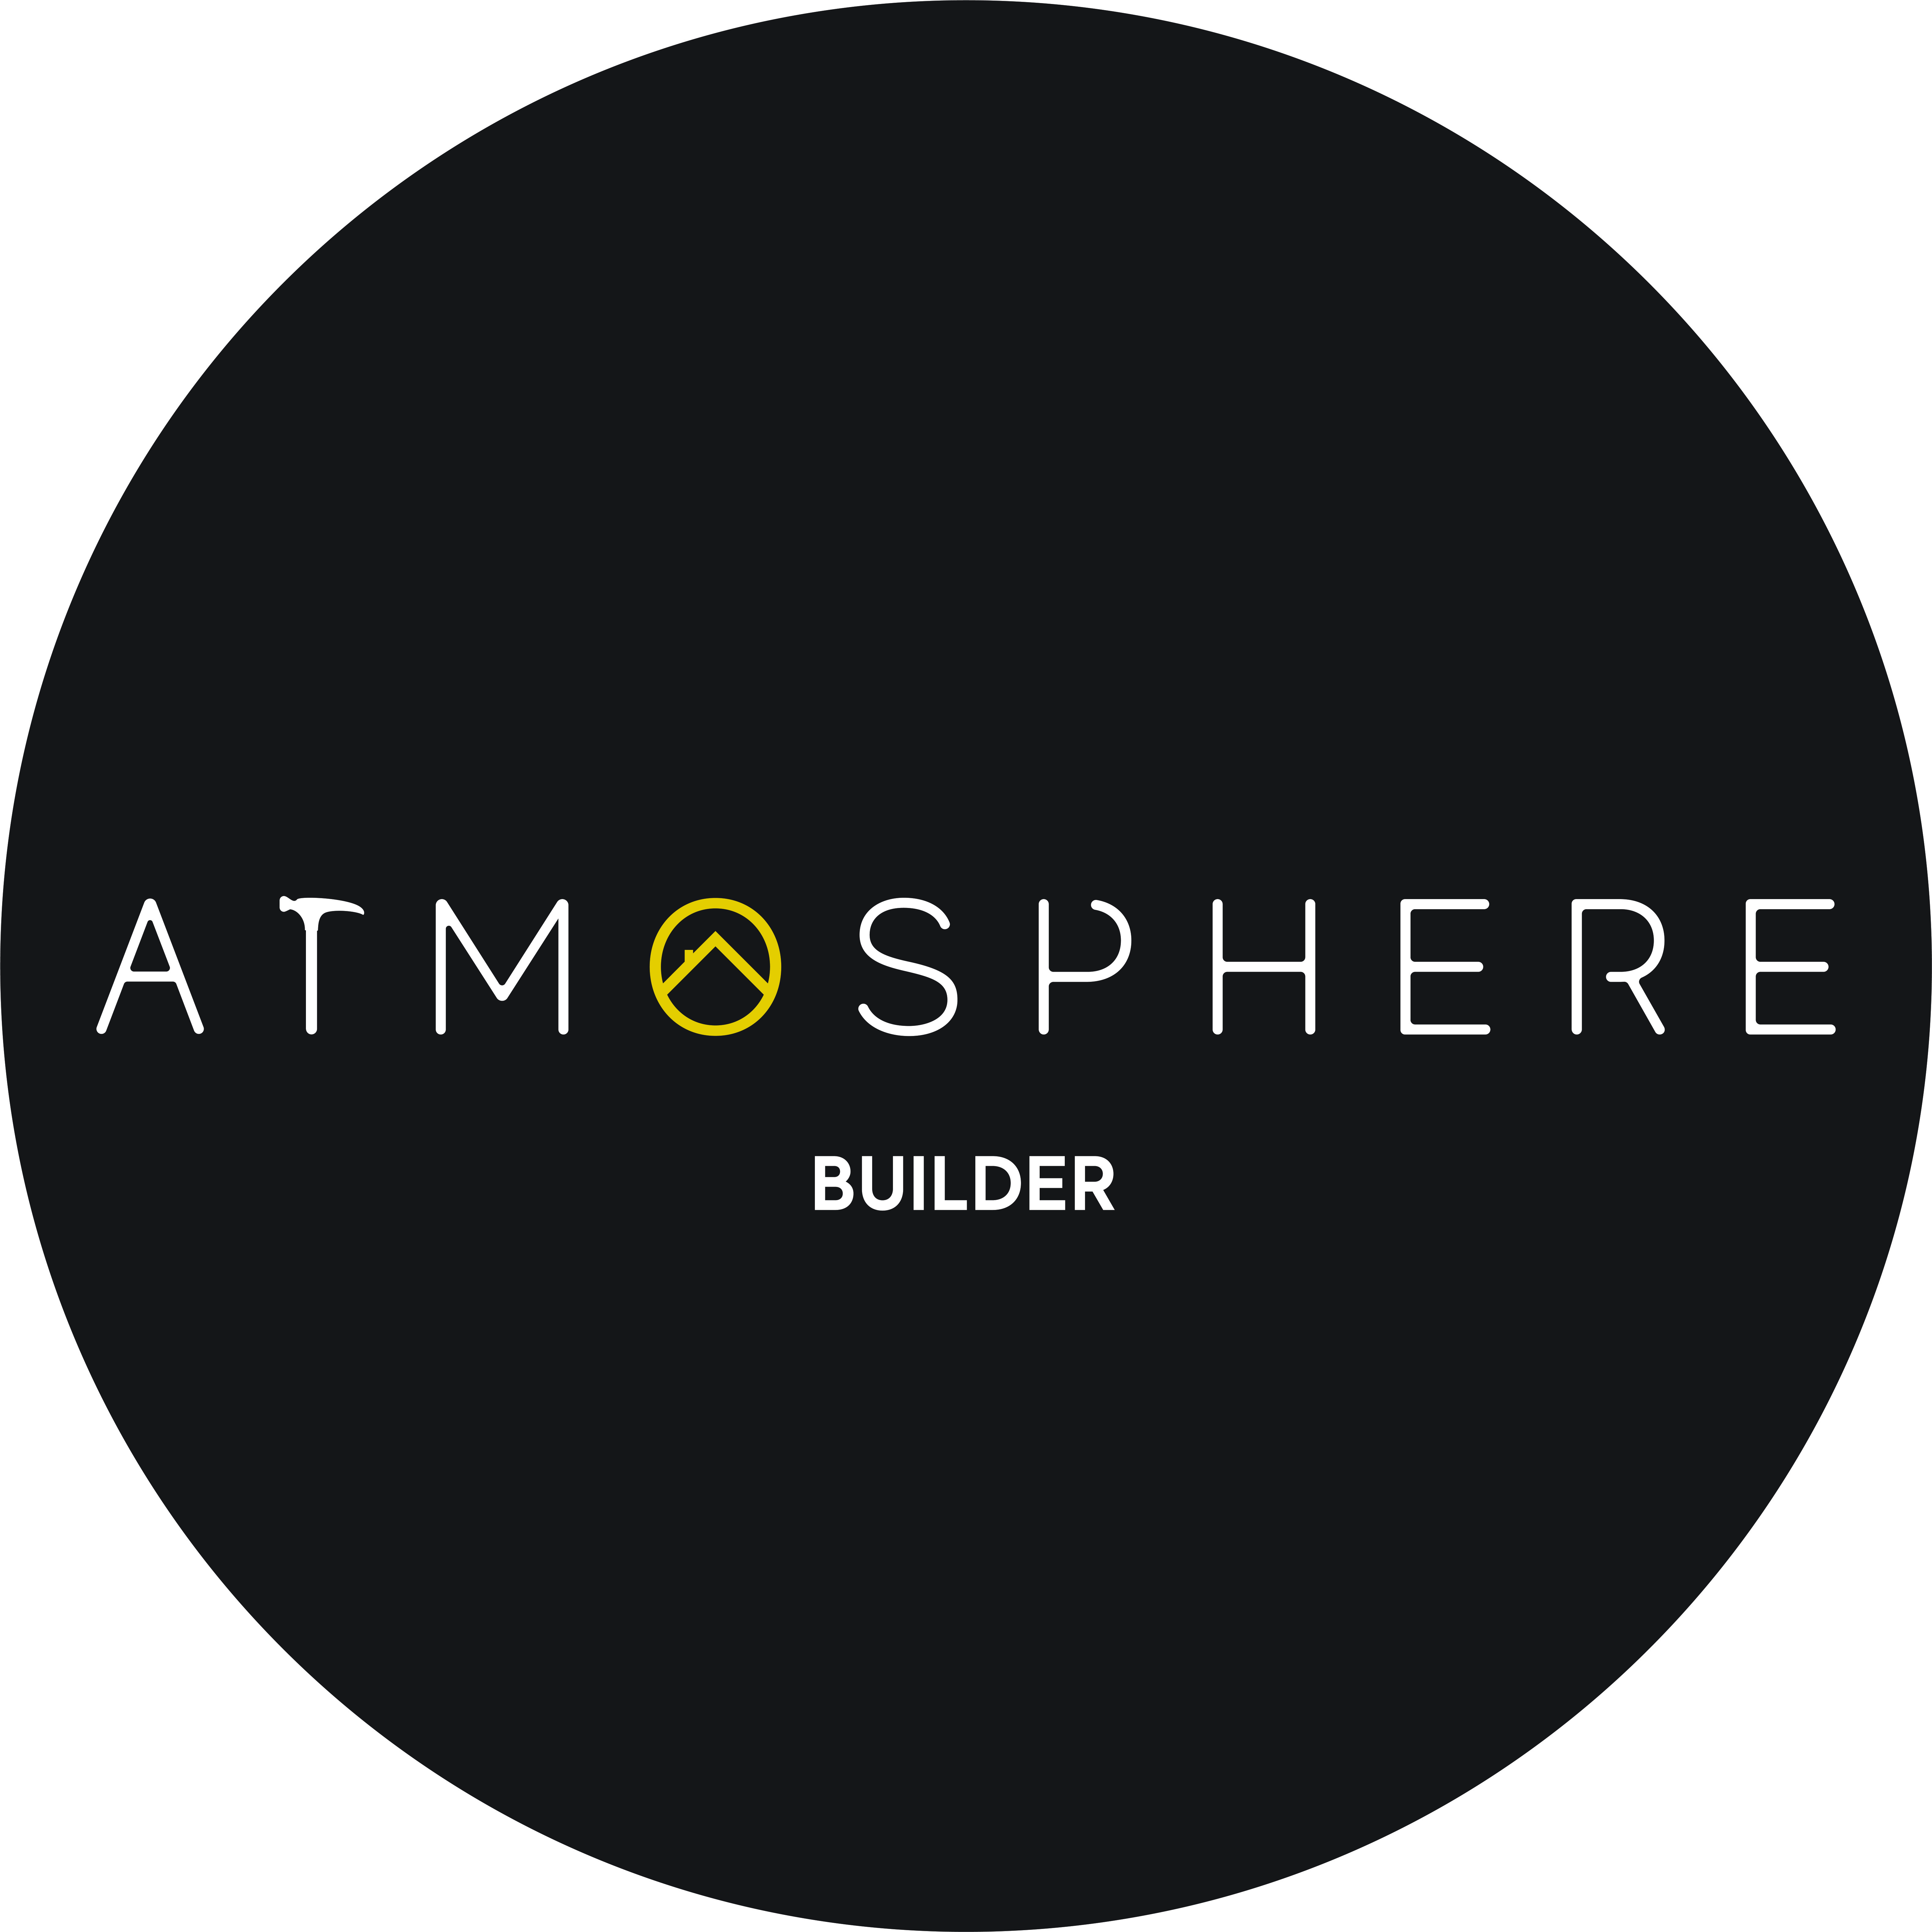 Atmosphere Builder's logo